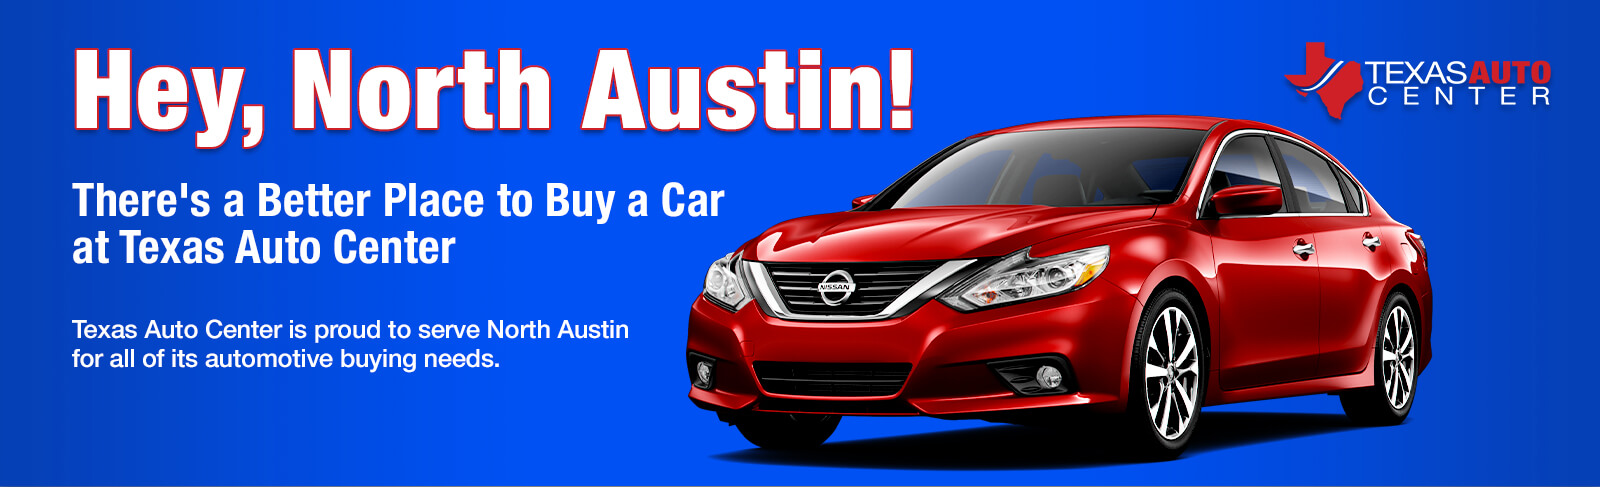 Texas Auto Center - Used Car Dealership - Austin TX